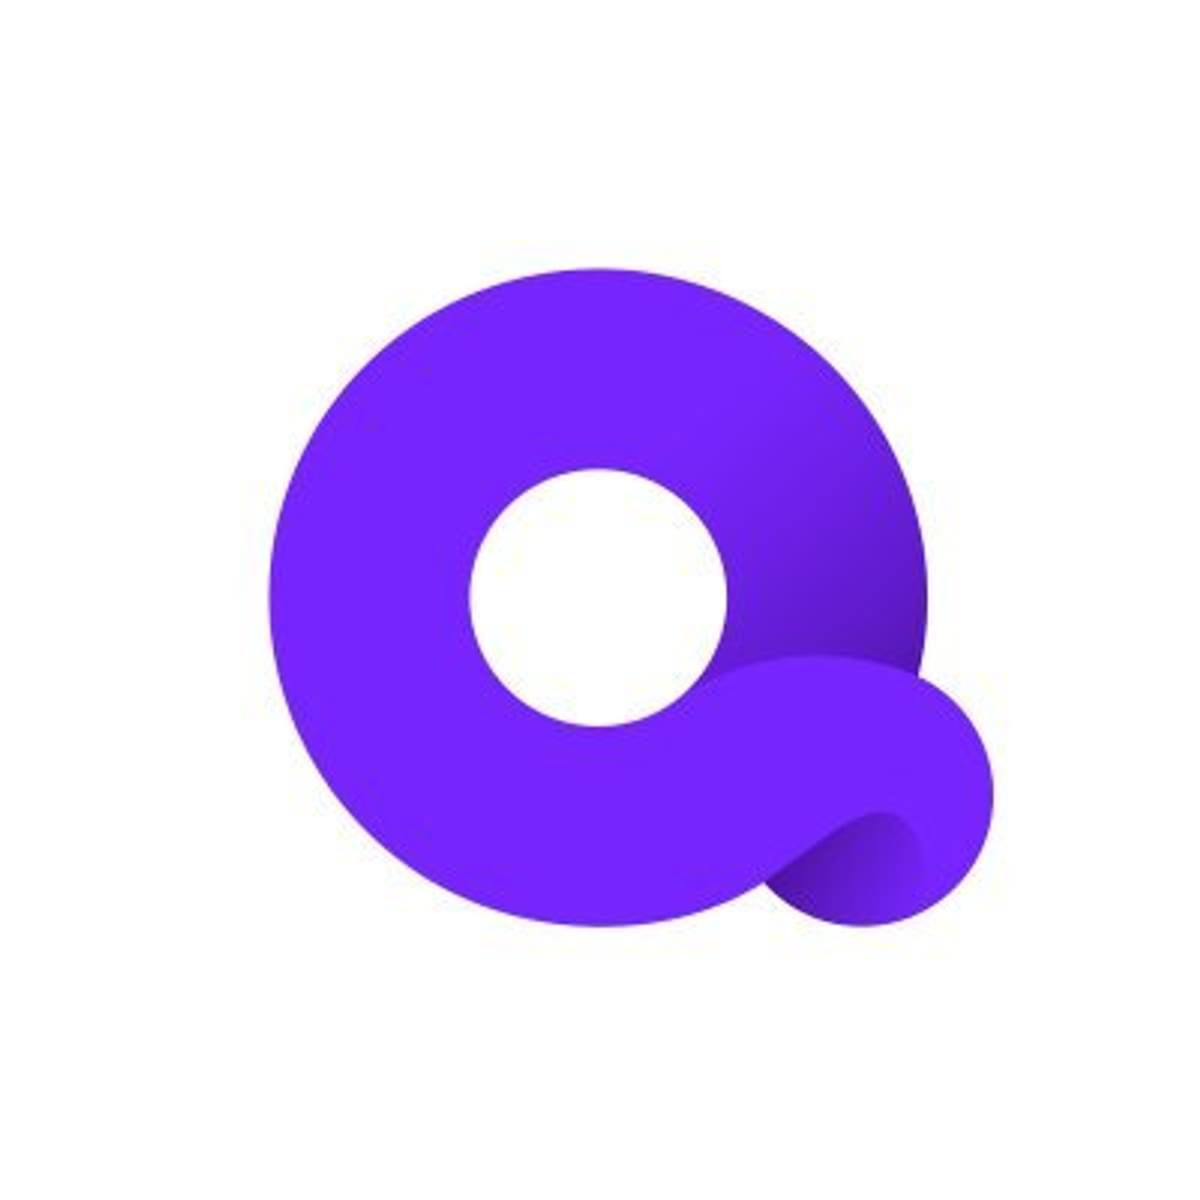 Streaming services platform Quibi stopt ermee image